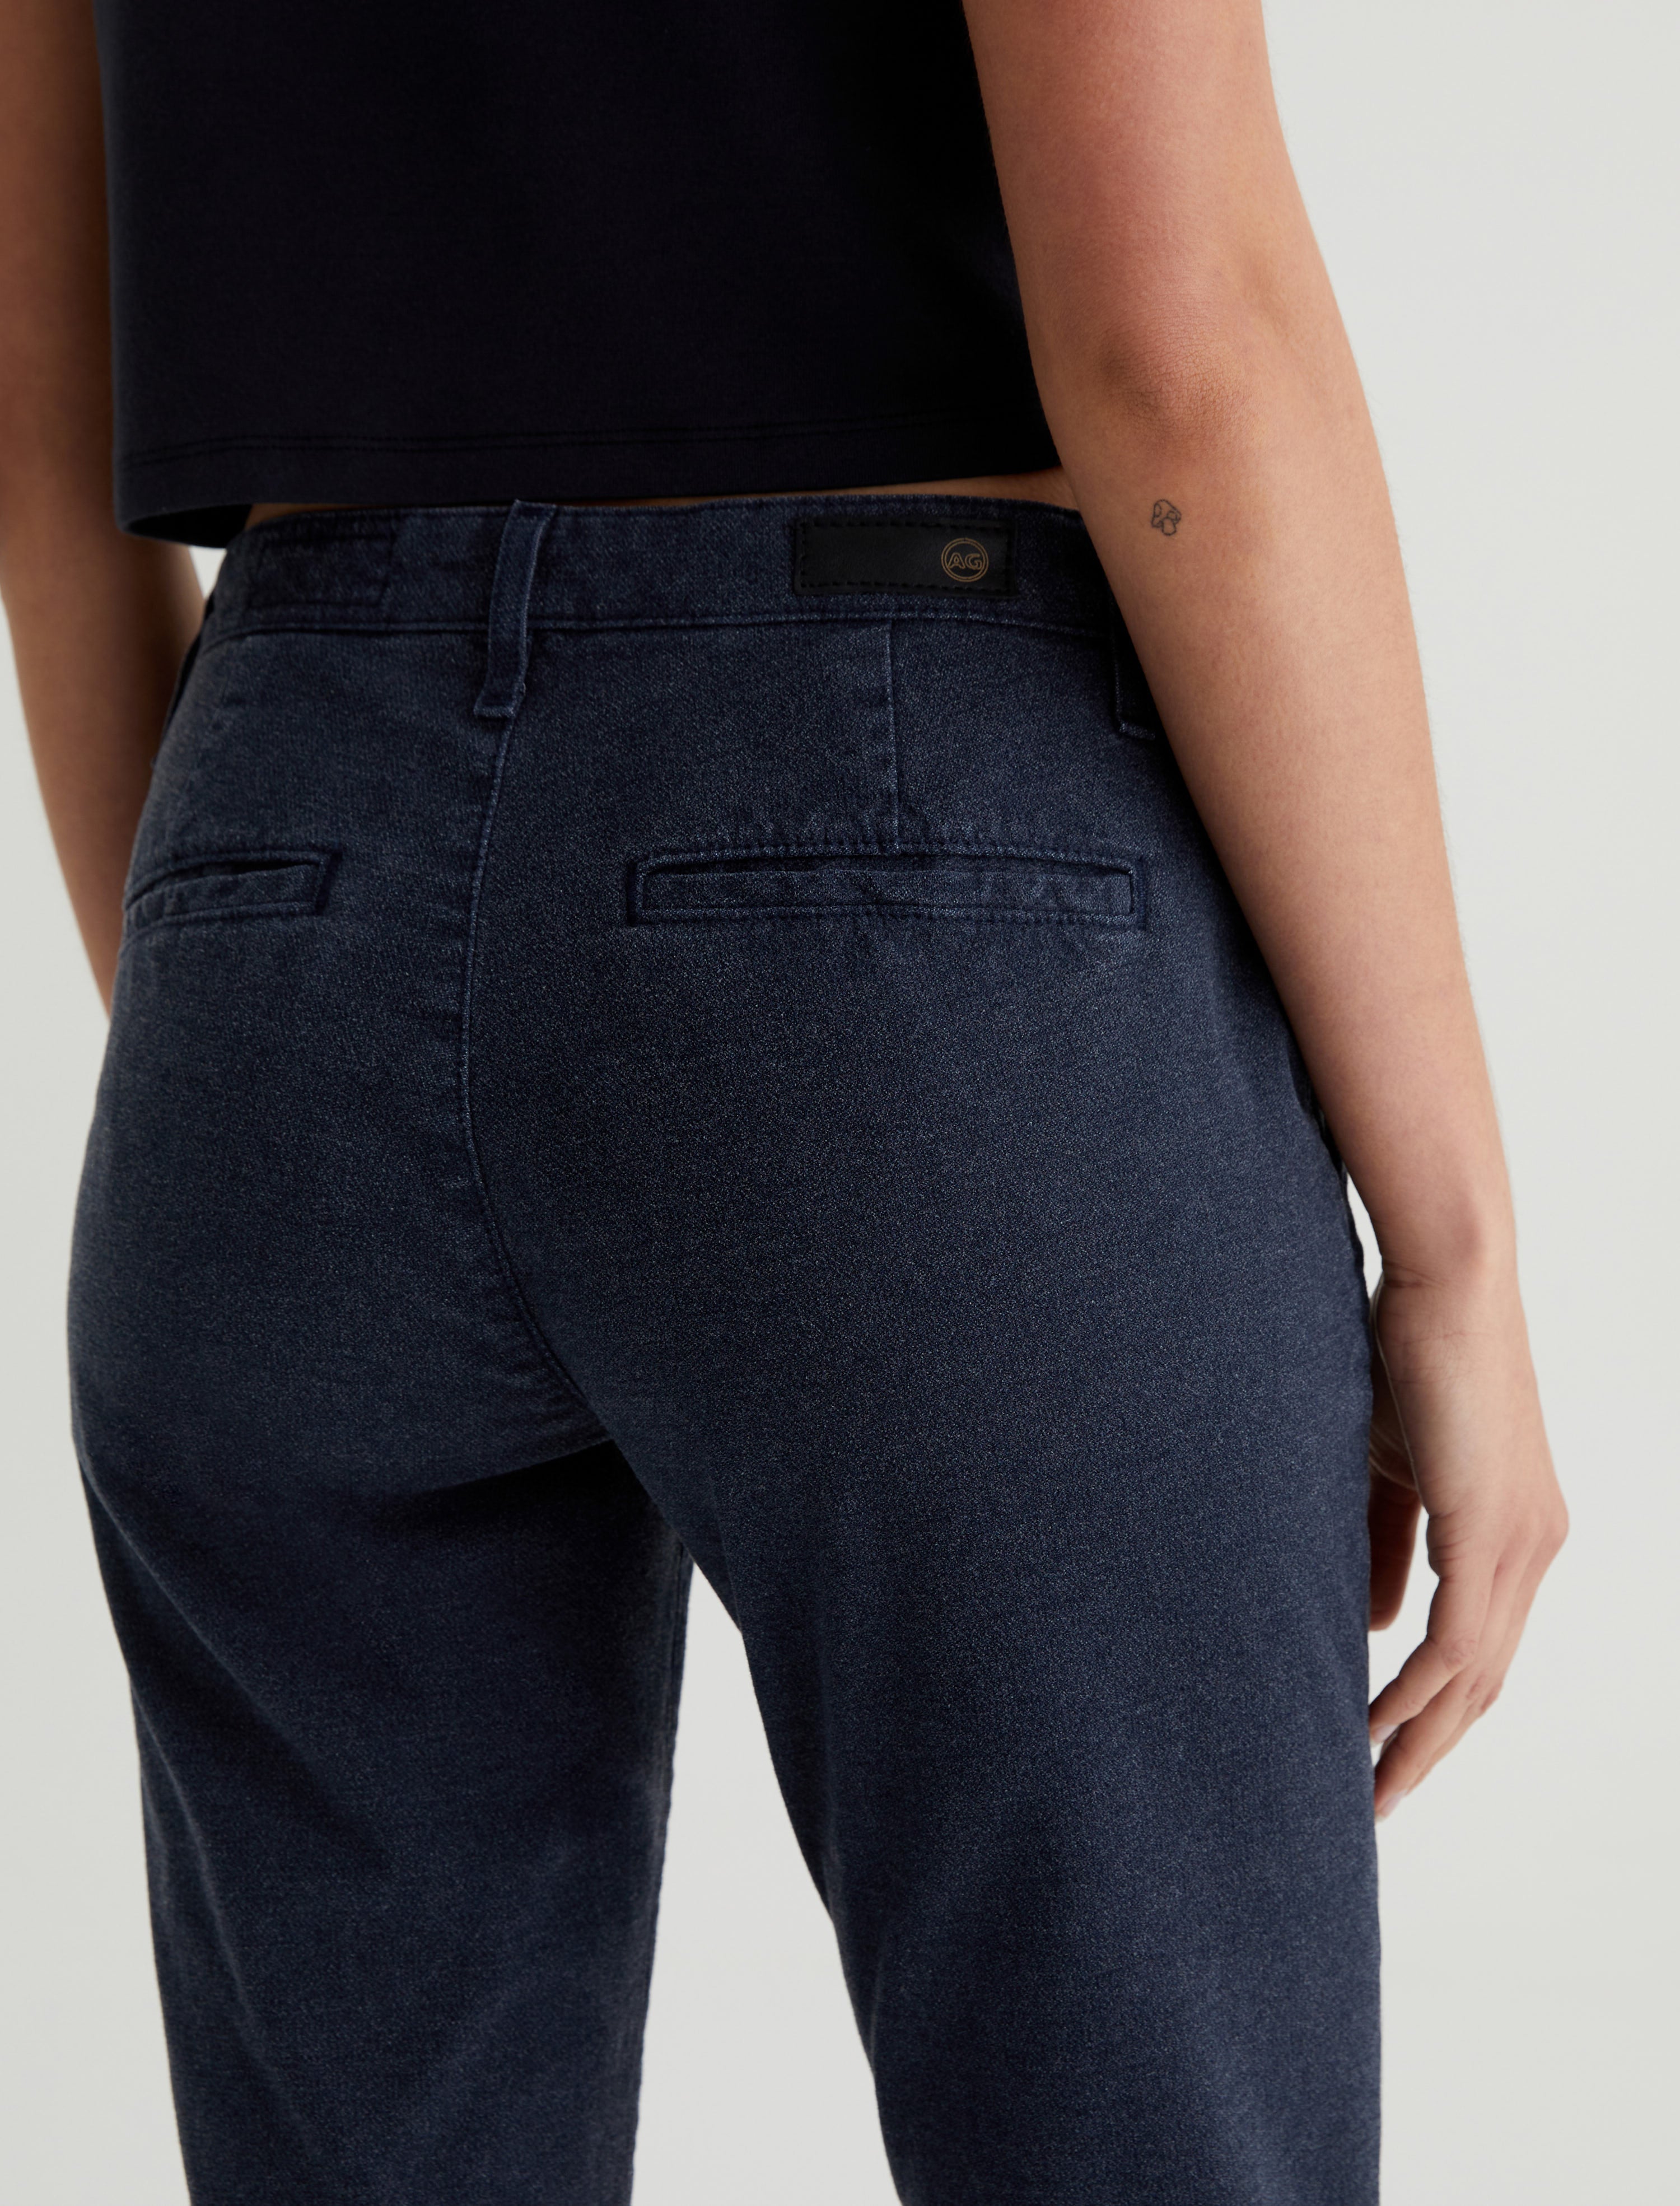 Tailored trouser | Pants | Women's | Ferragamo US